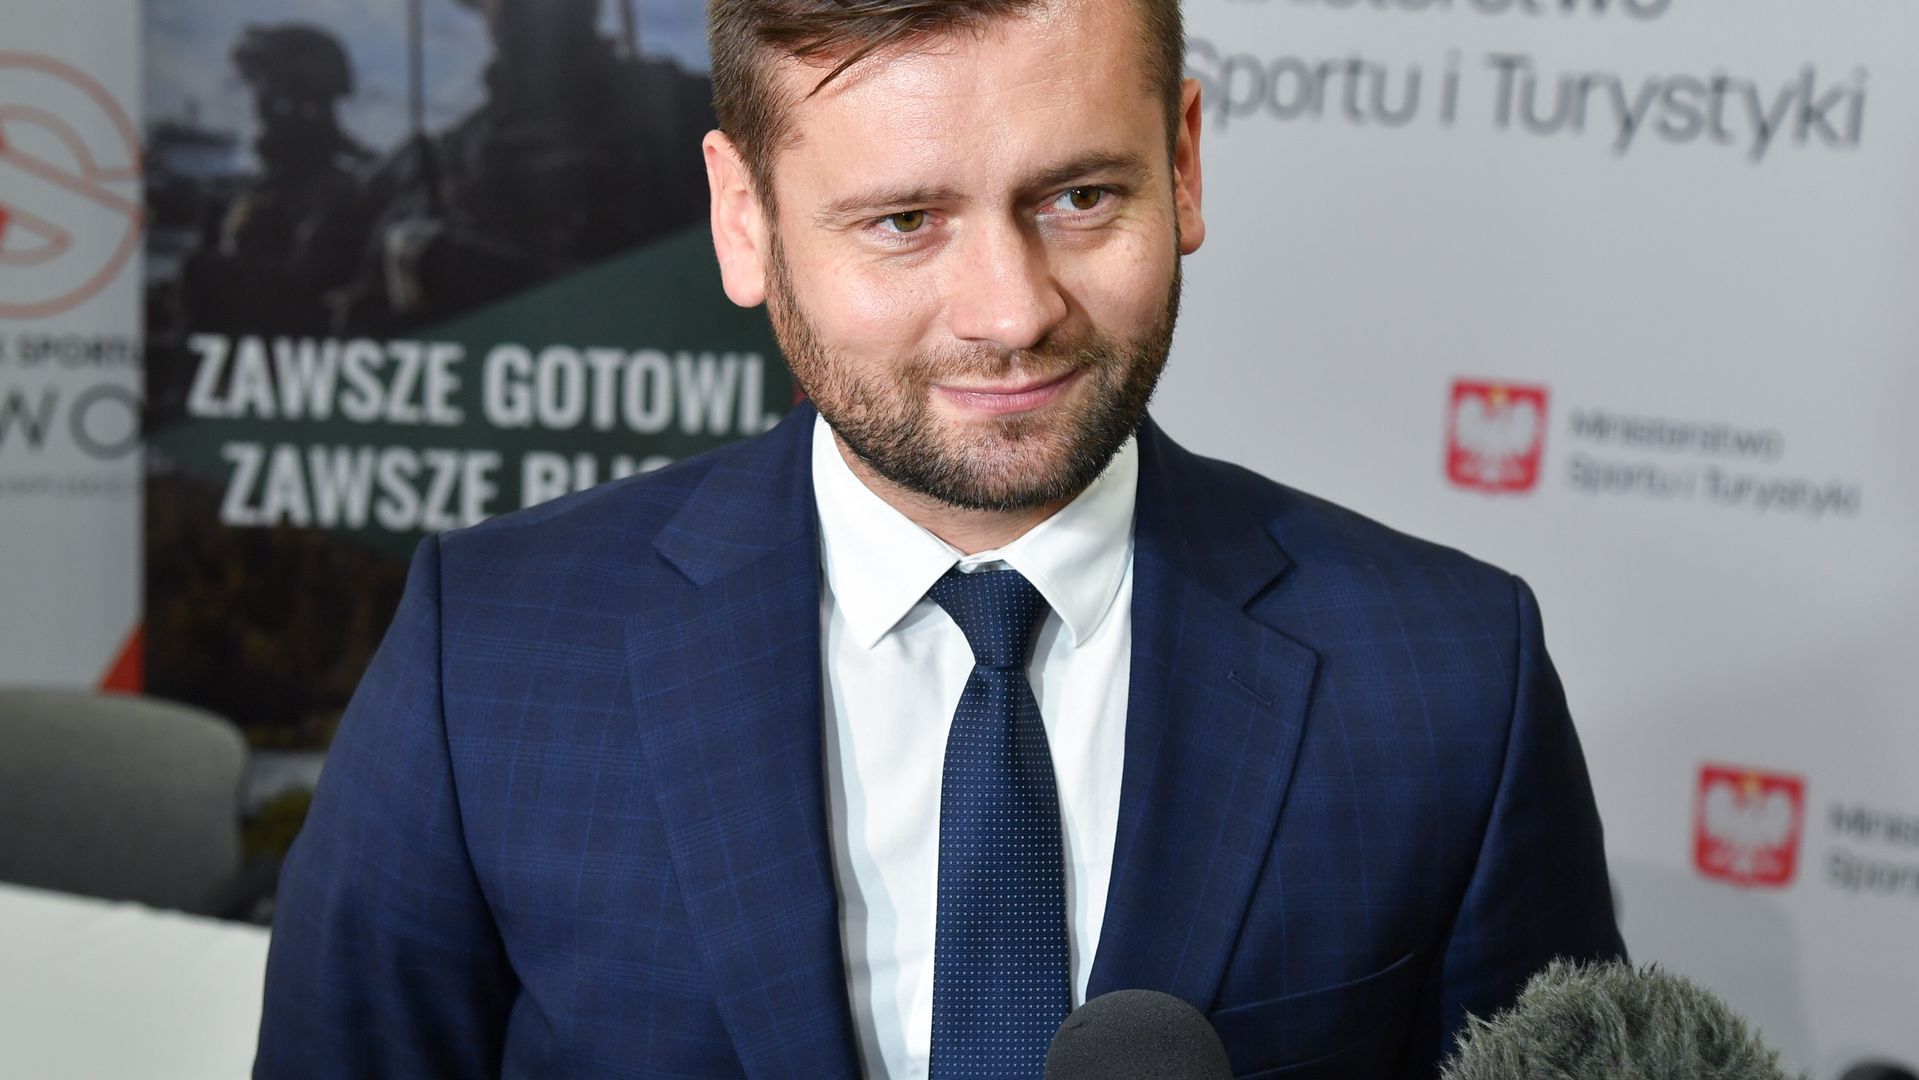 Minister Sportu Kamil Bortniczuk